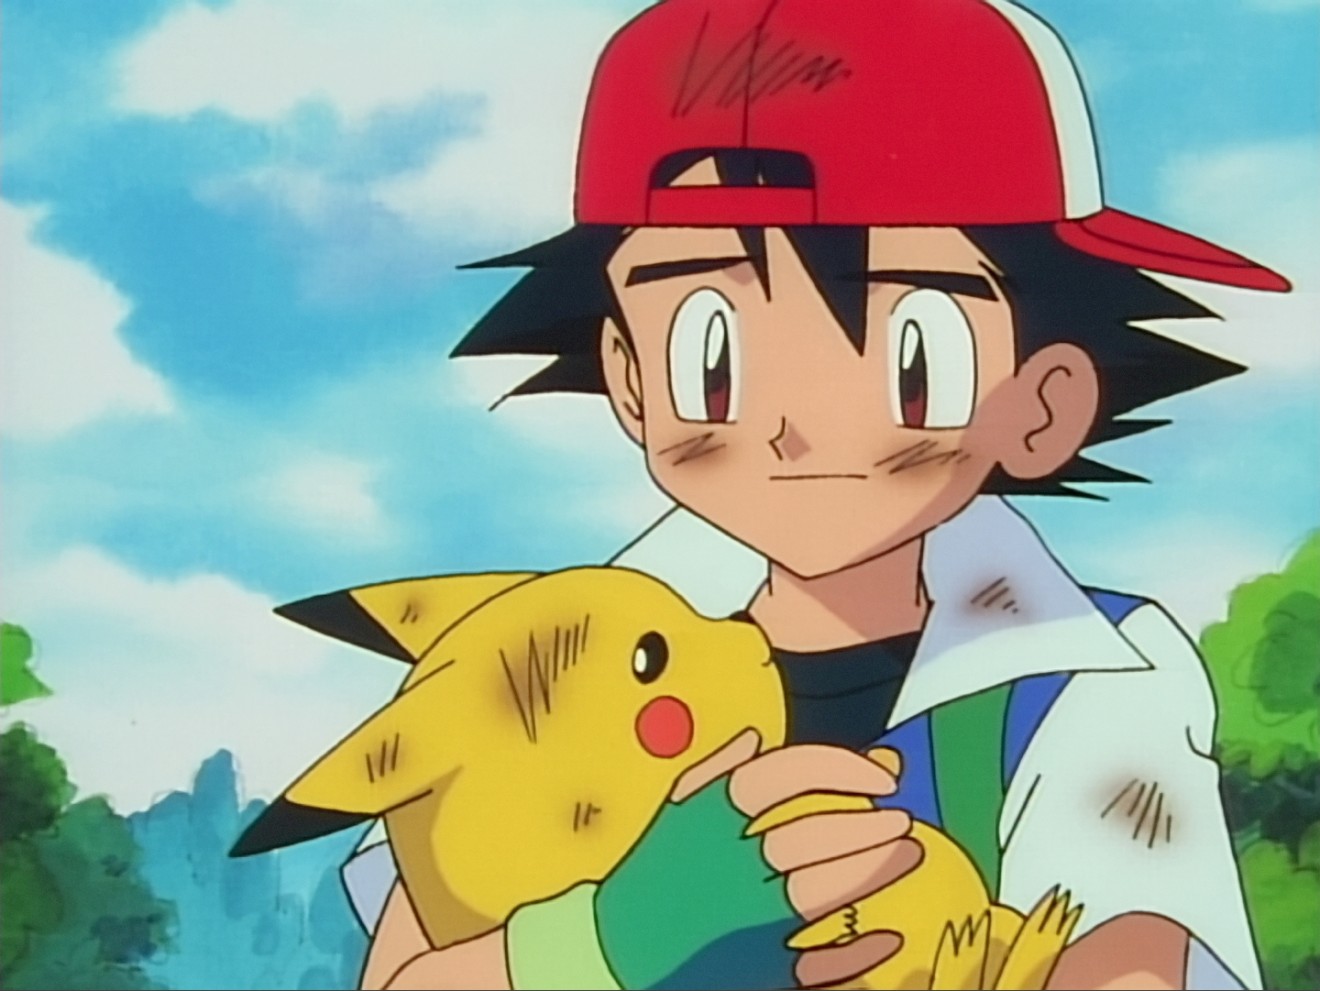 UK: Ash, the Alola Pokémon League Champion!